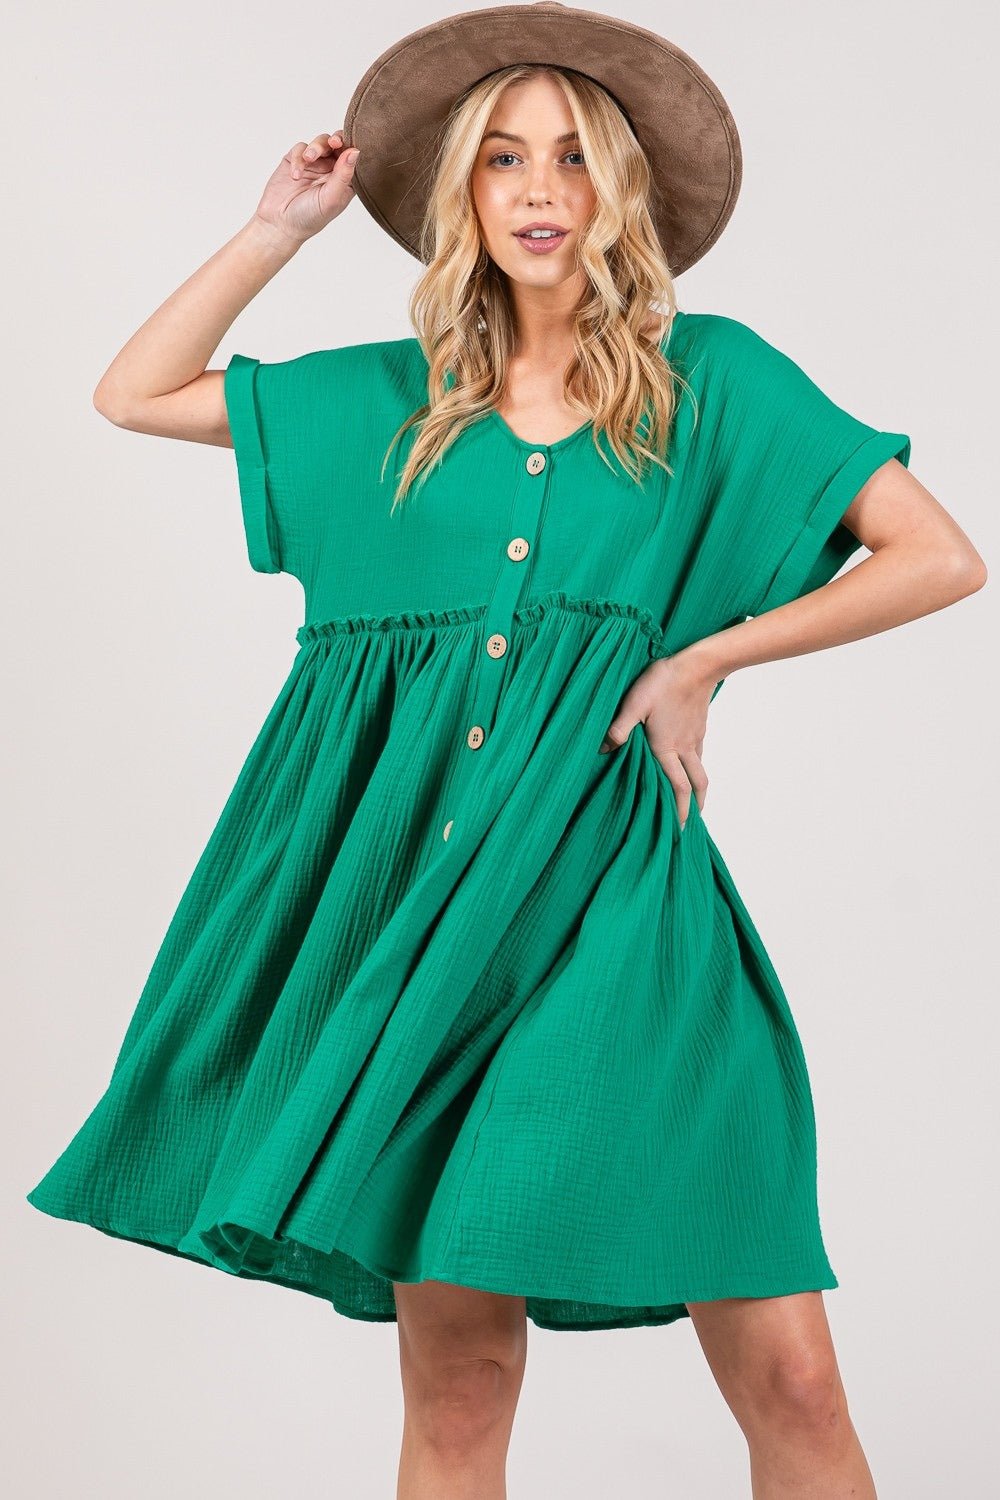 Button Up Short Sleeve Mini Dress in Kelly GreenMini DressSAGE+FIG